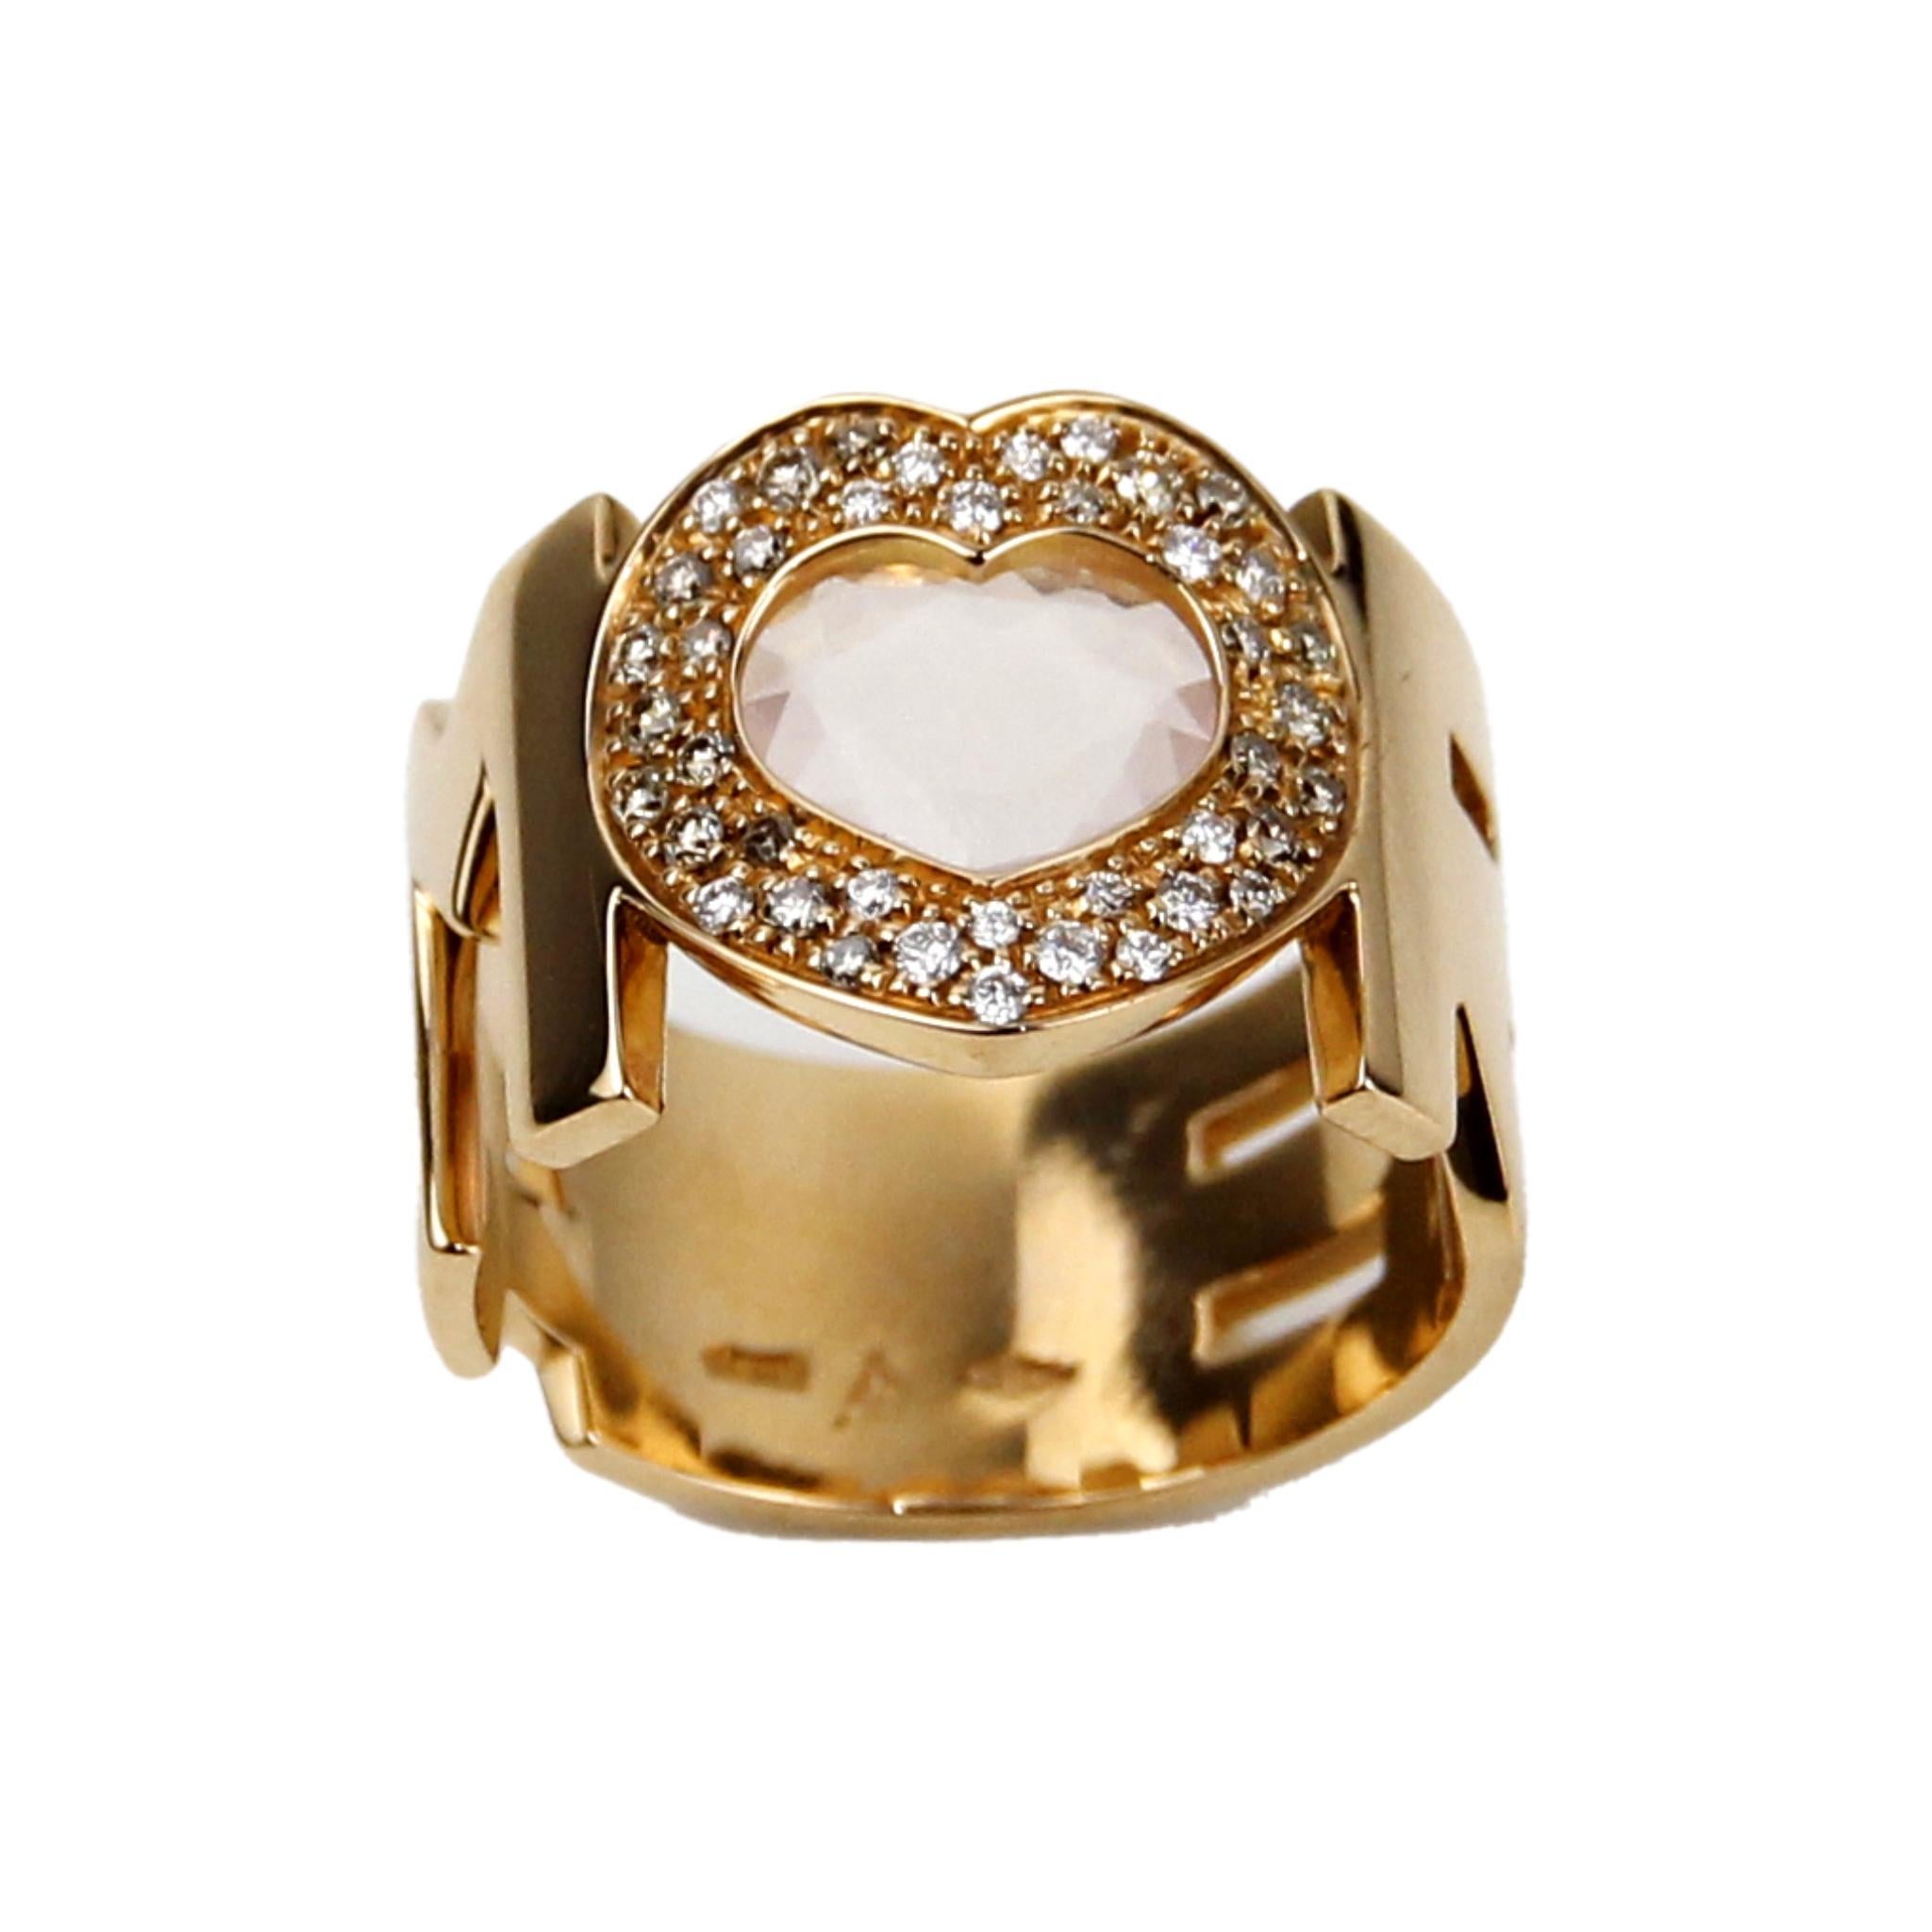 Pasquale Bruni White Gold Diamond Heart Ring

Diamond: 0.32ct

Size: 6.25